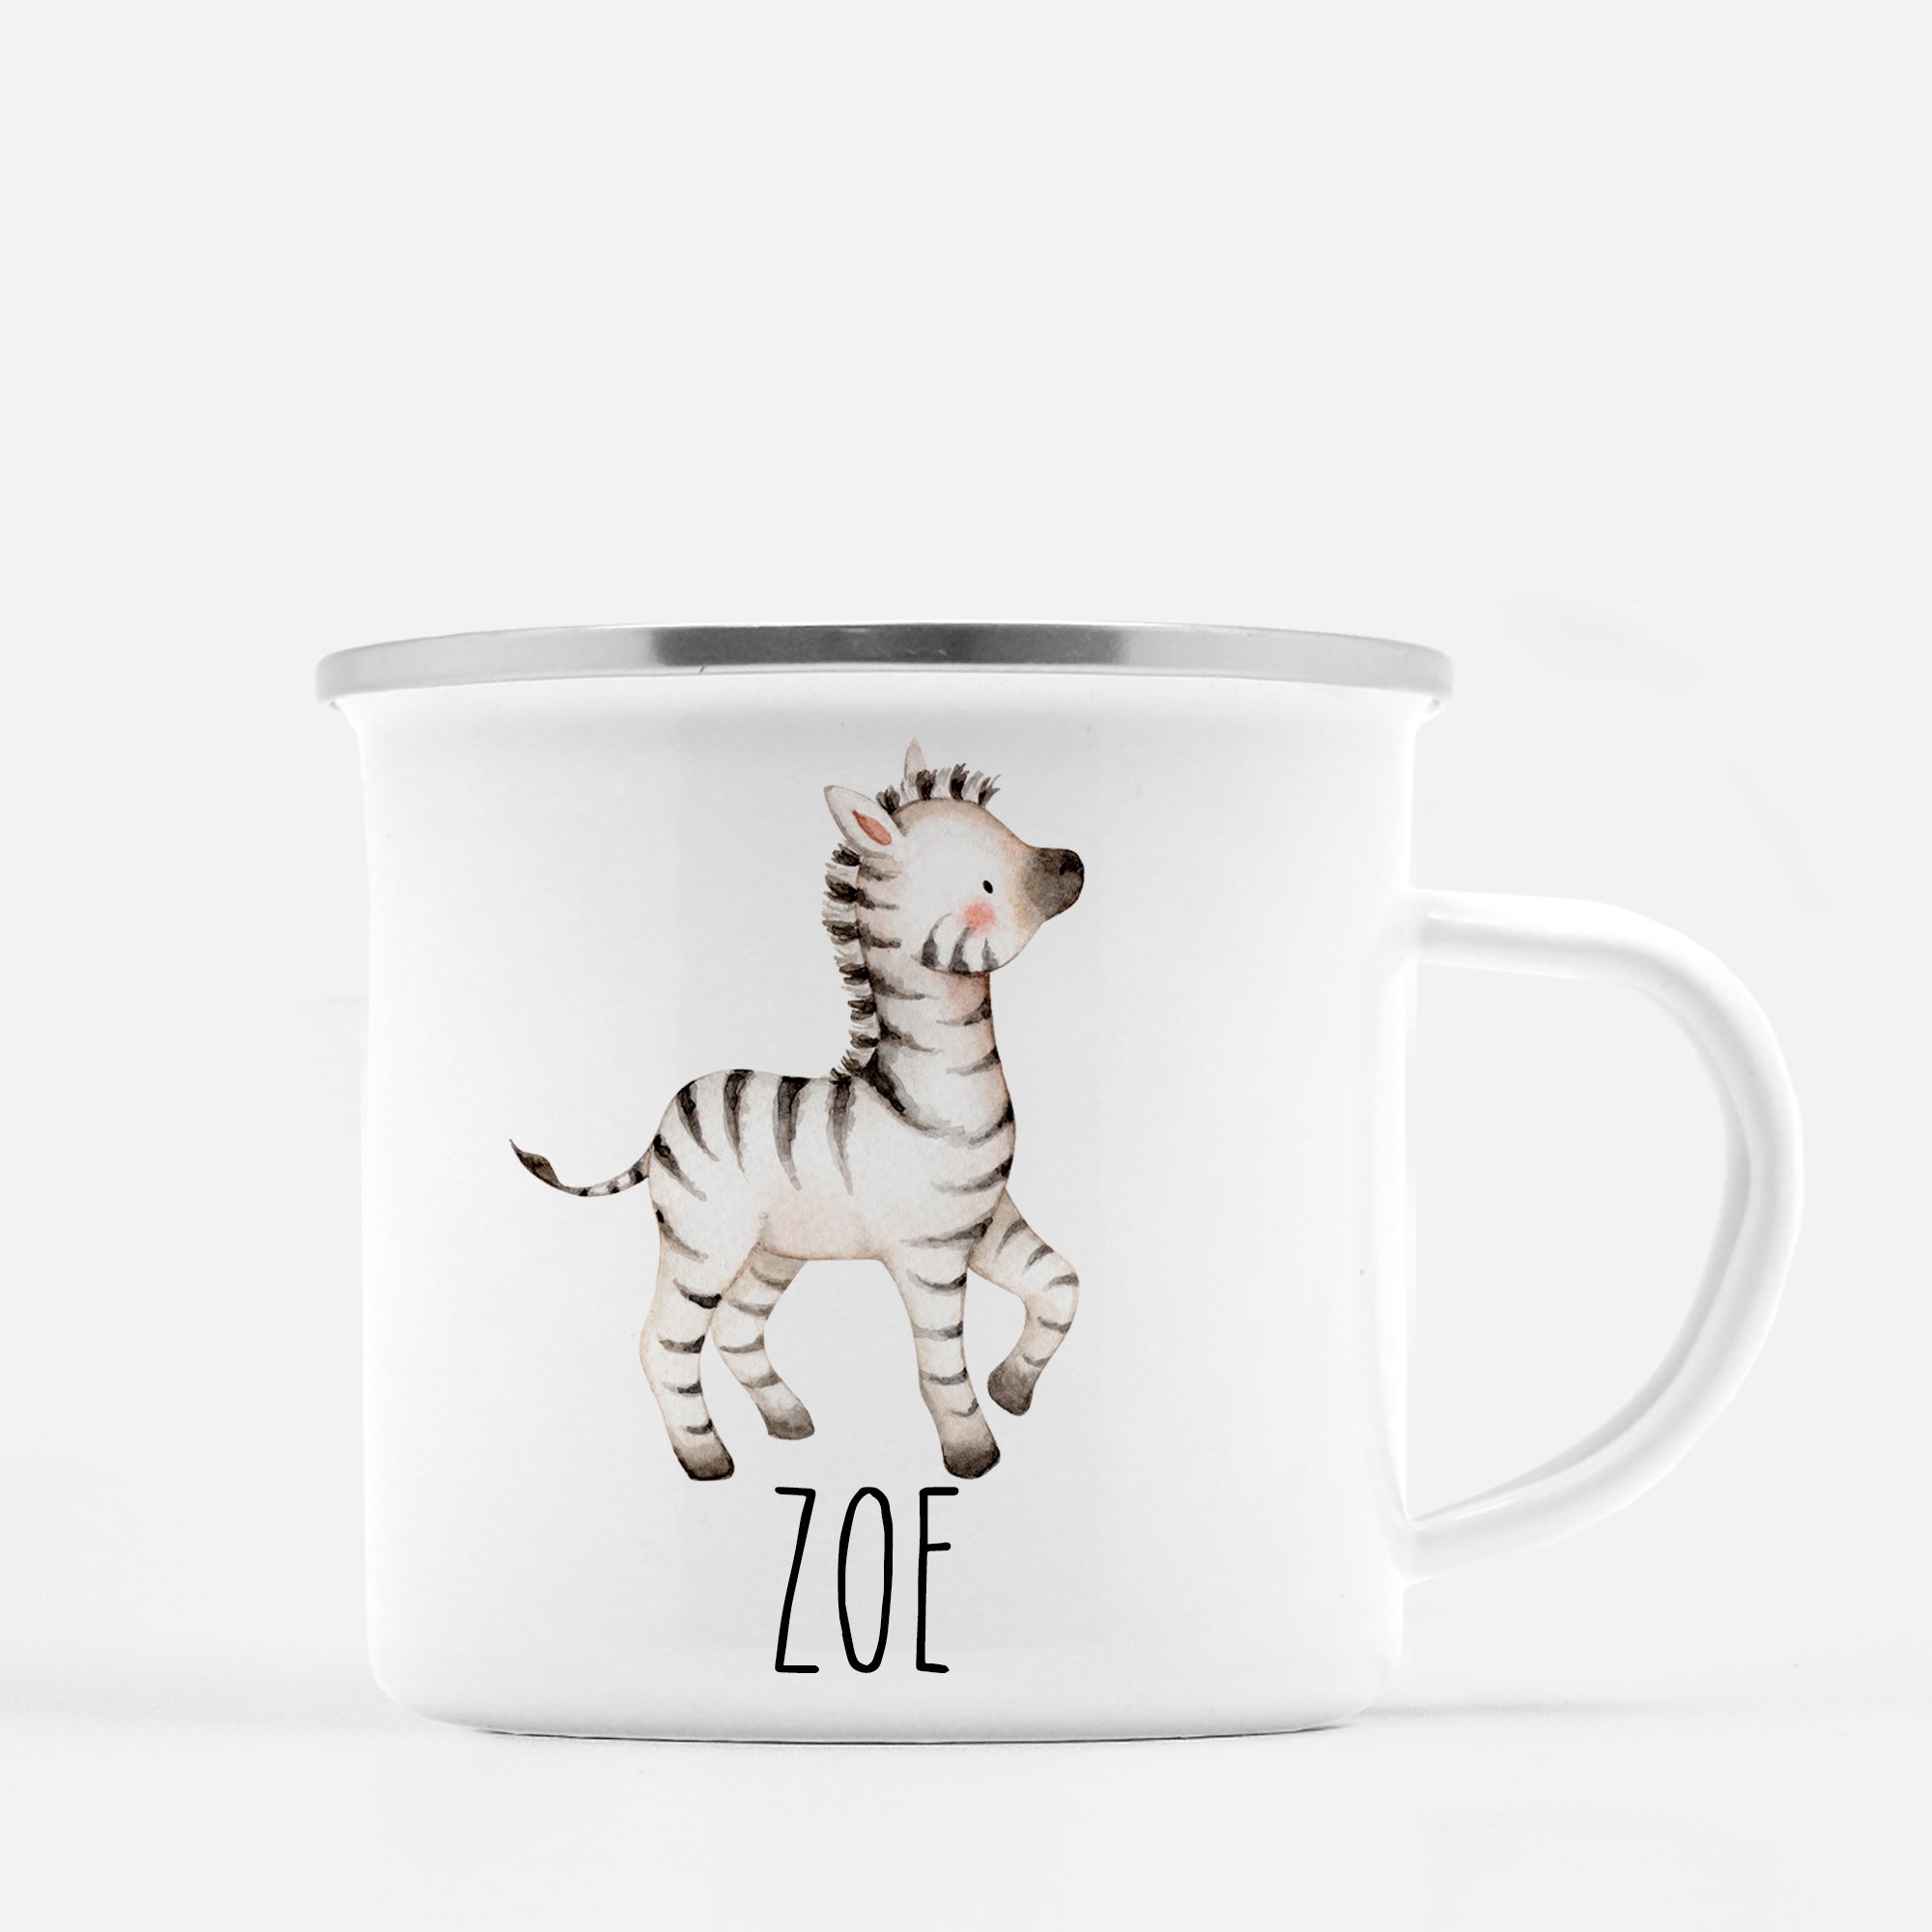 zebra camp mug, personalized with child's name, Pipsy.com